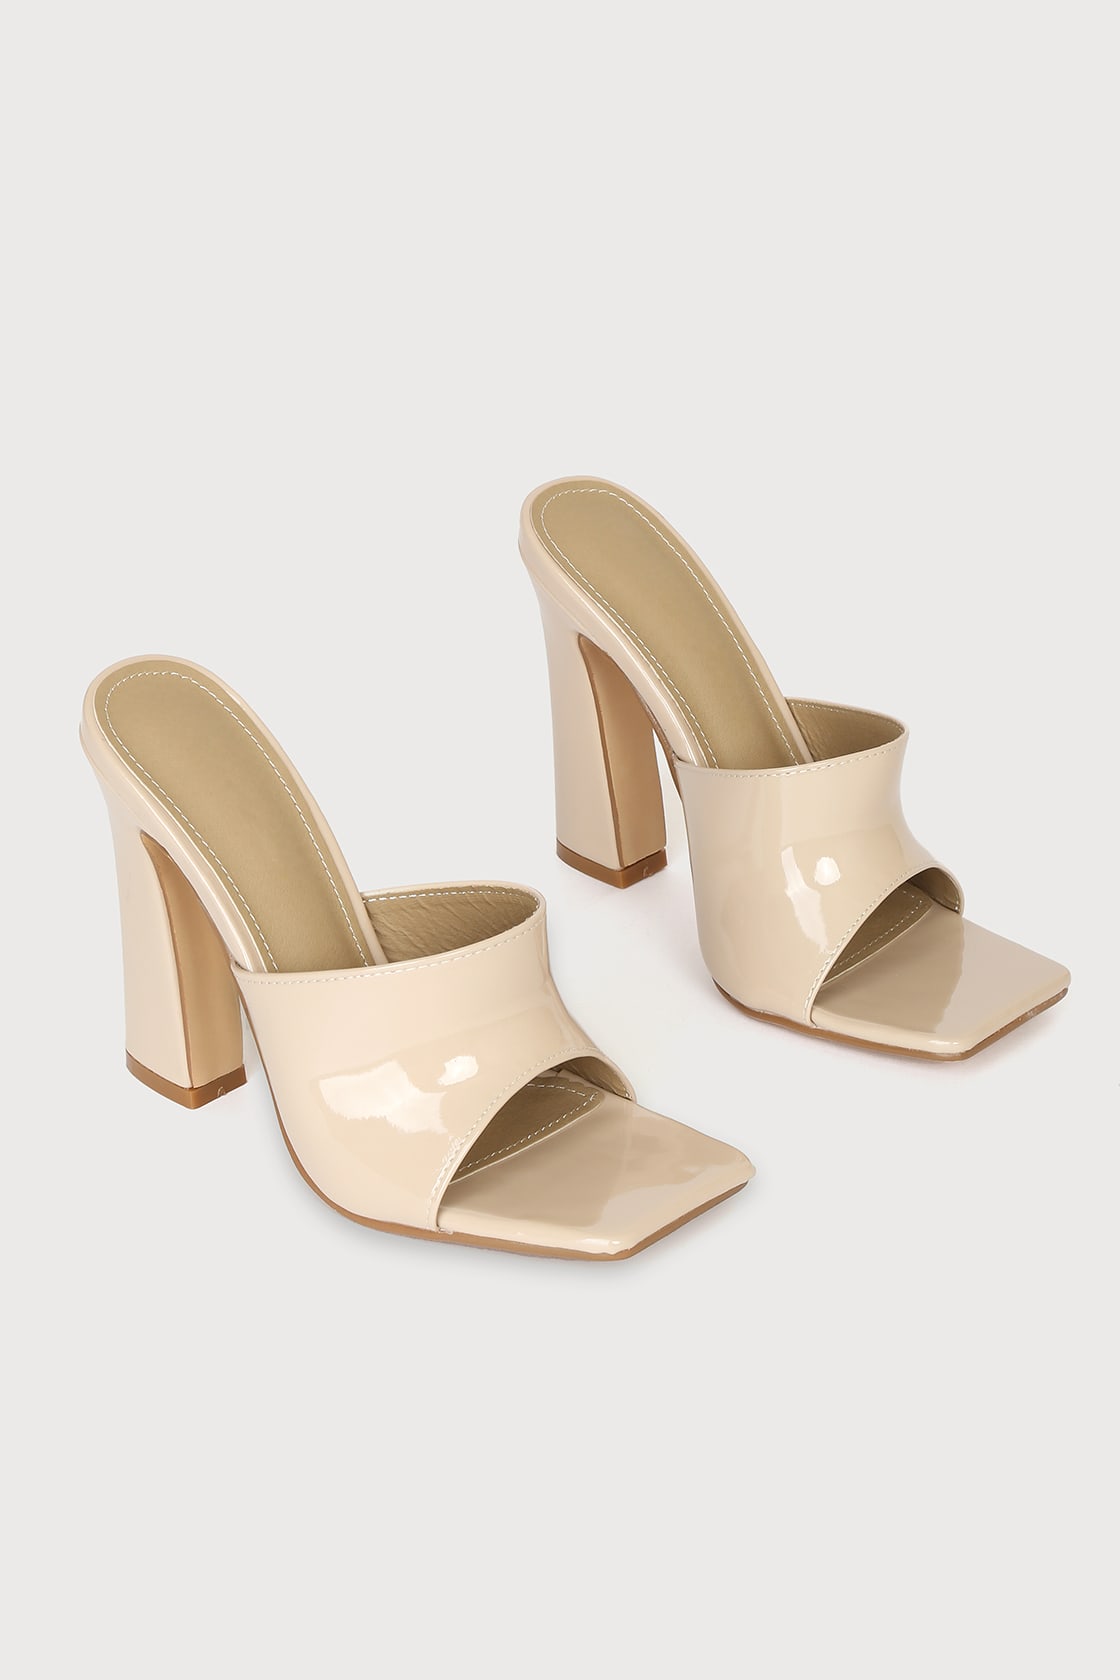 Briannah Cream Patent High Heel Slide Sandals